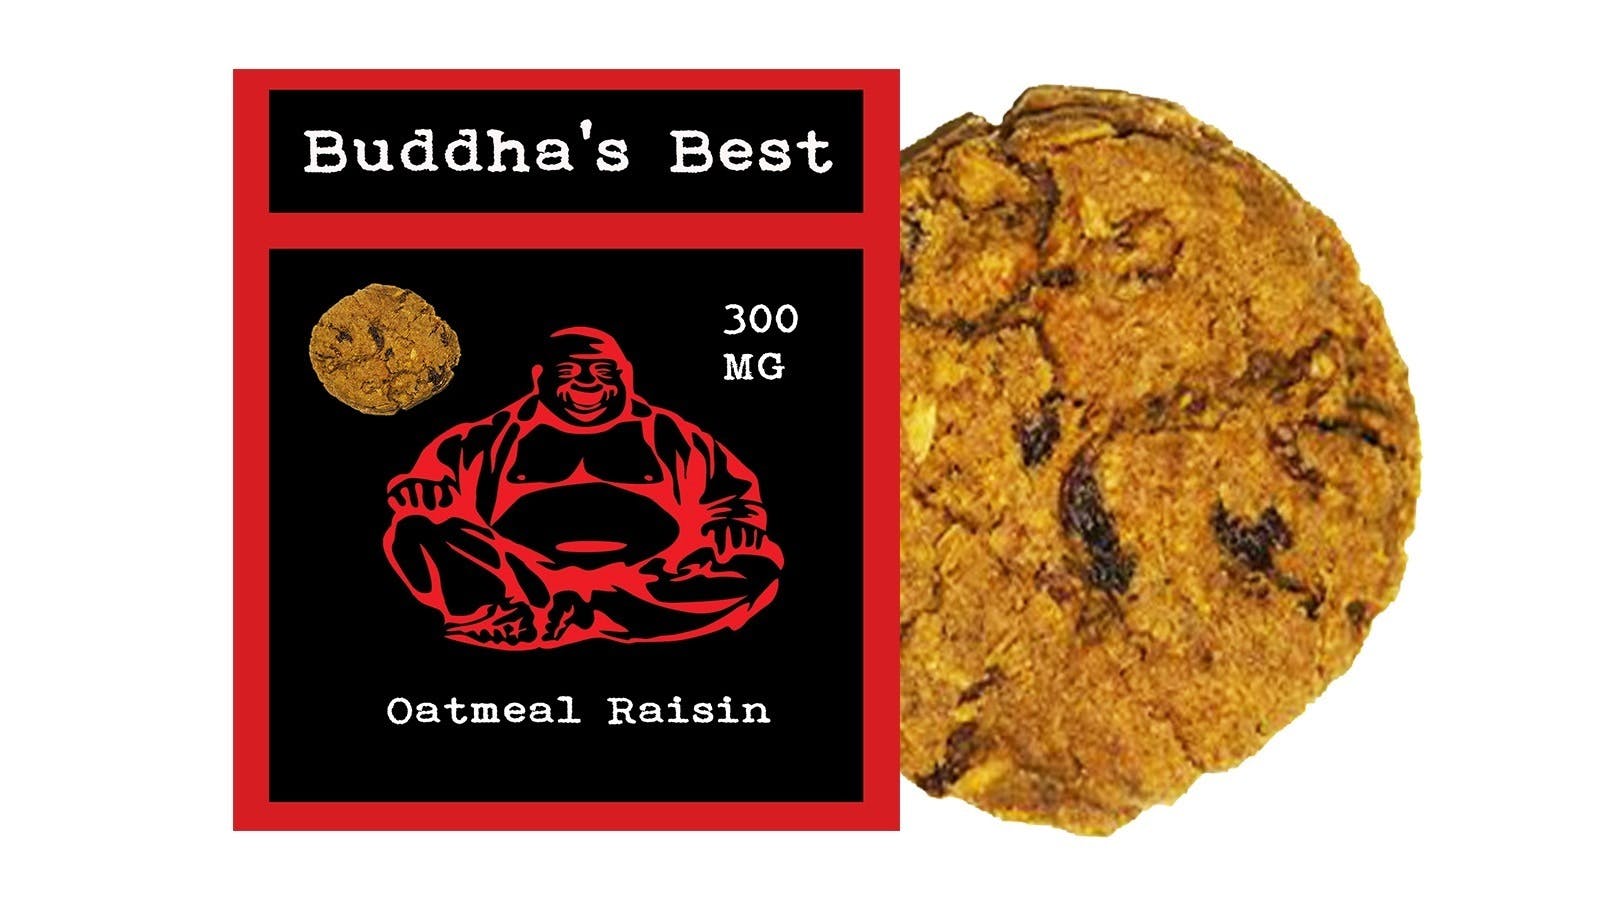 edible-buddhas-best-1000mg-a-c2-80cwhite-chocolate-macadamiaa-c2-80c